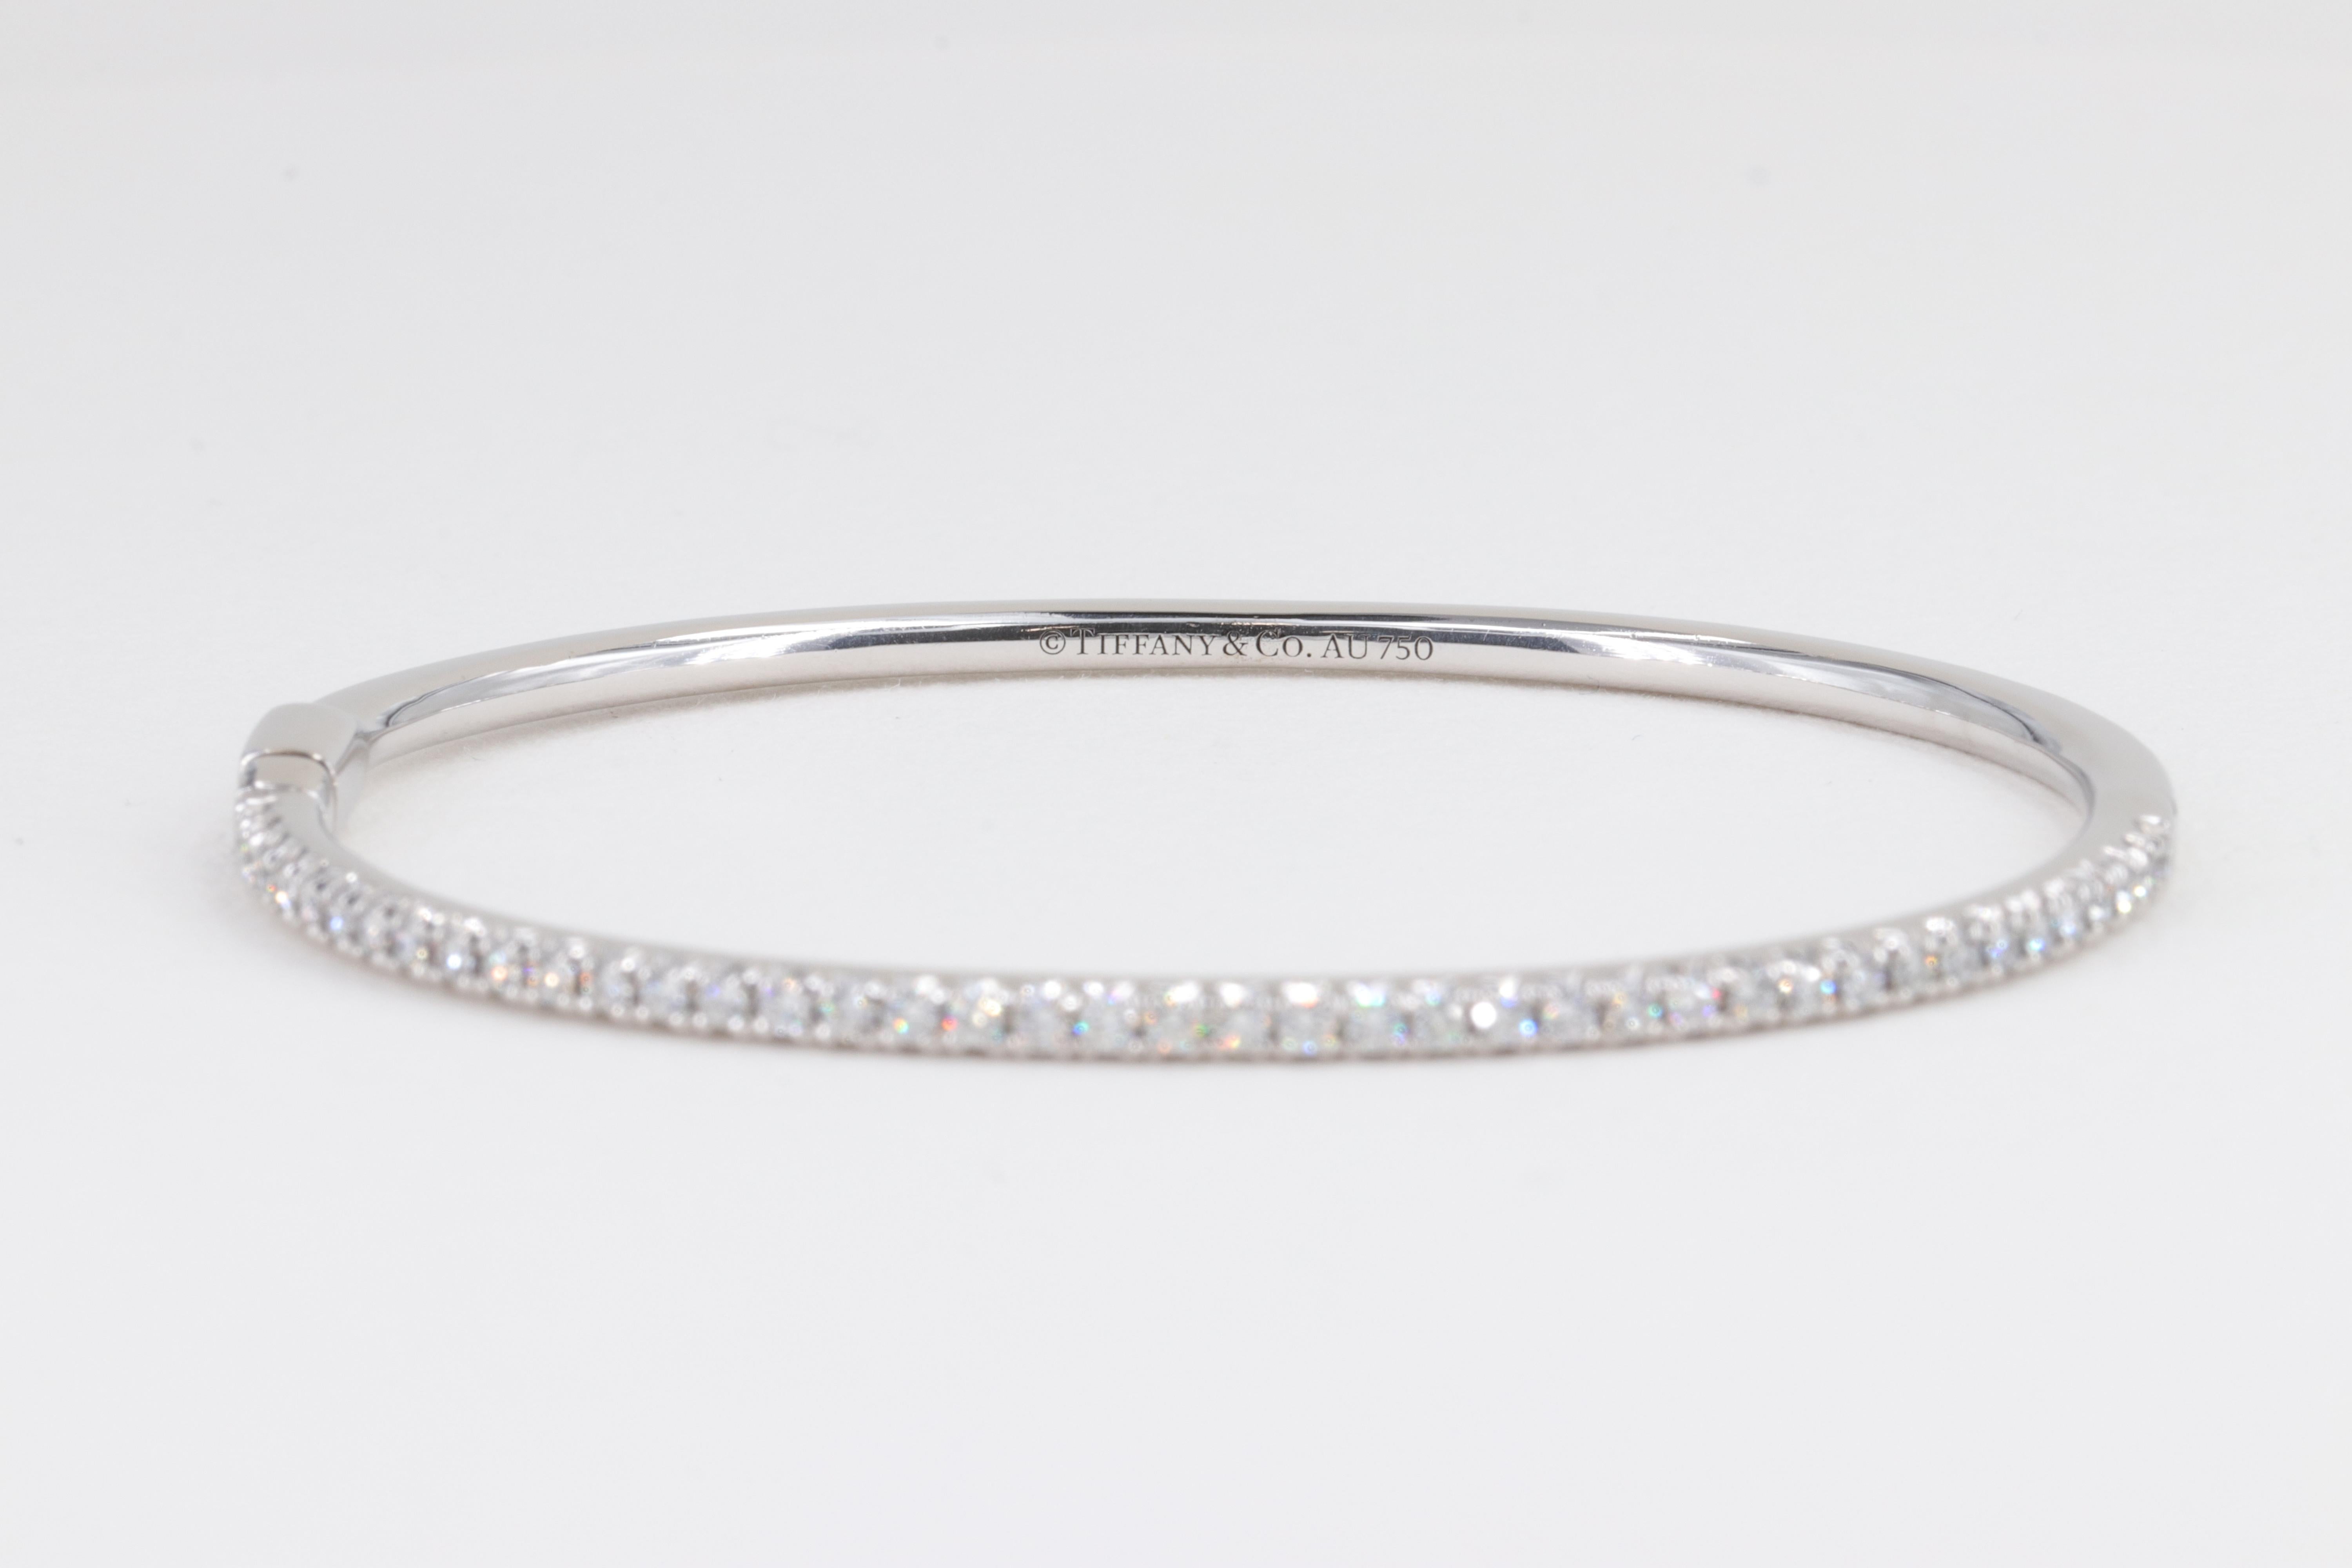 Tiffany & Co. Metro Hinged Diamond and 18 Karat White Gold Bangle

Diamonds:

Diamonds - 41 = 0.61ctw
Color - D-F
Clarity - VS+

Bracelet:

Metal - 18 Karat White Gold 
Weight - 12.3 Grams